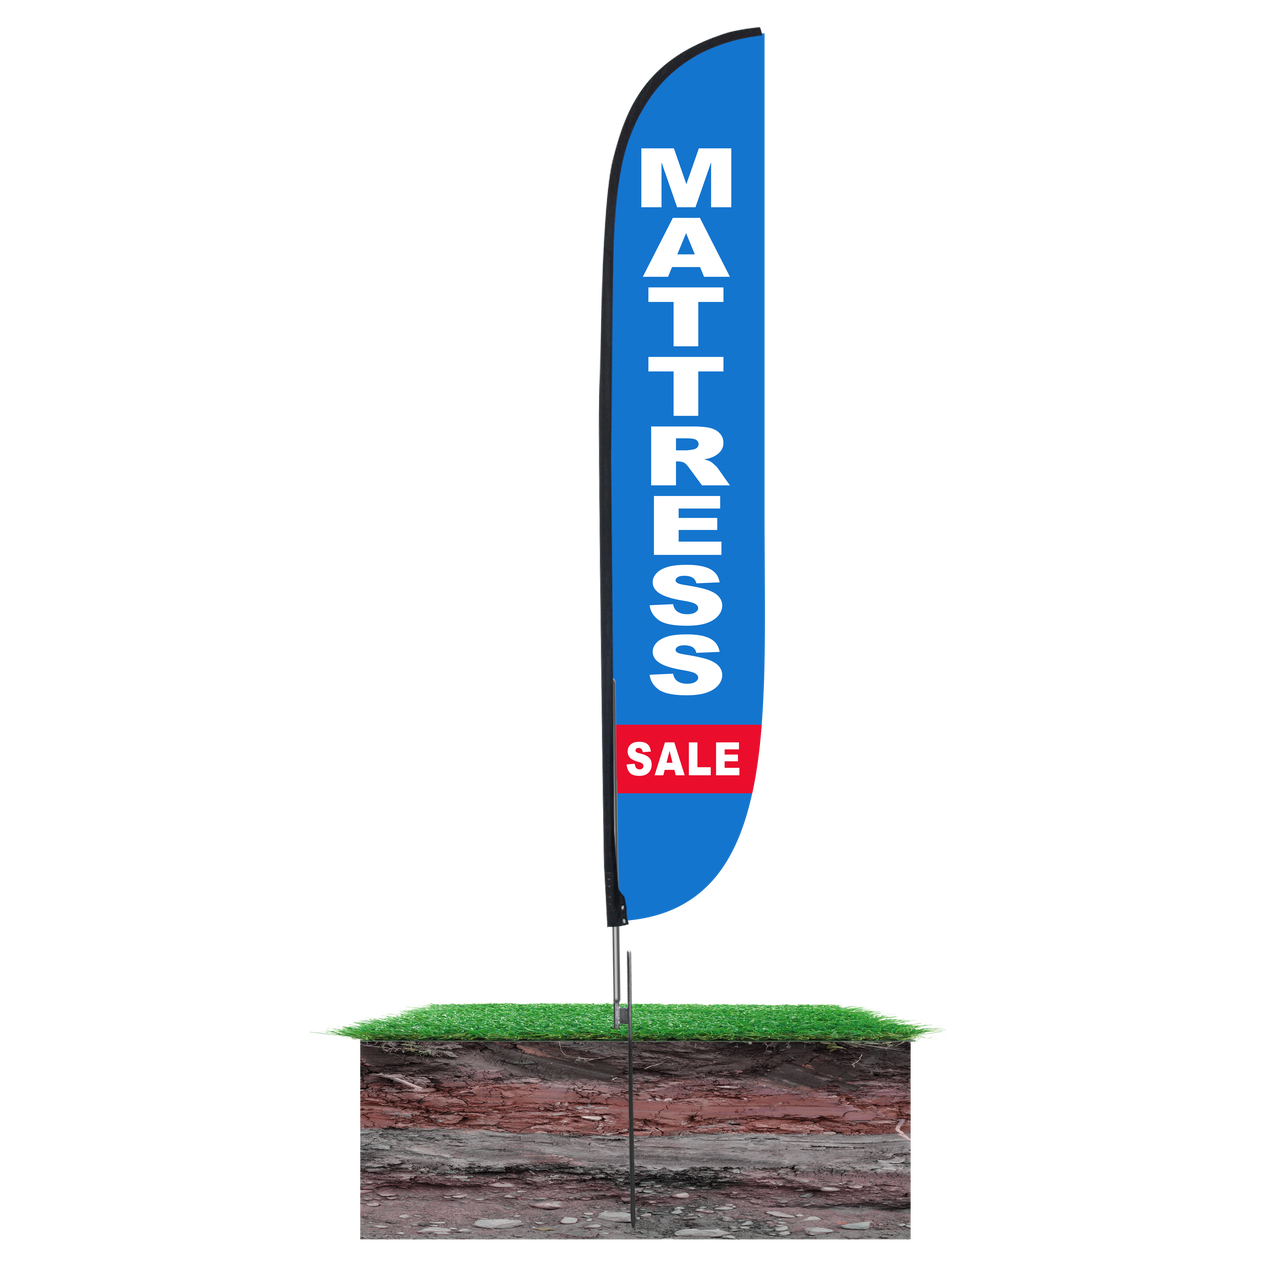 12ft Mattress Sale Feather Flag Blue